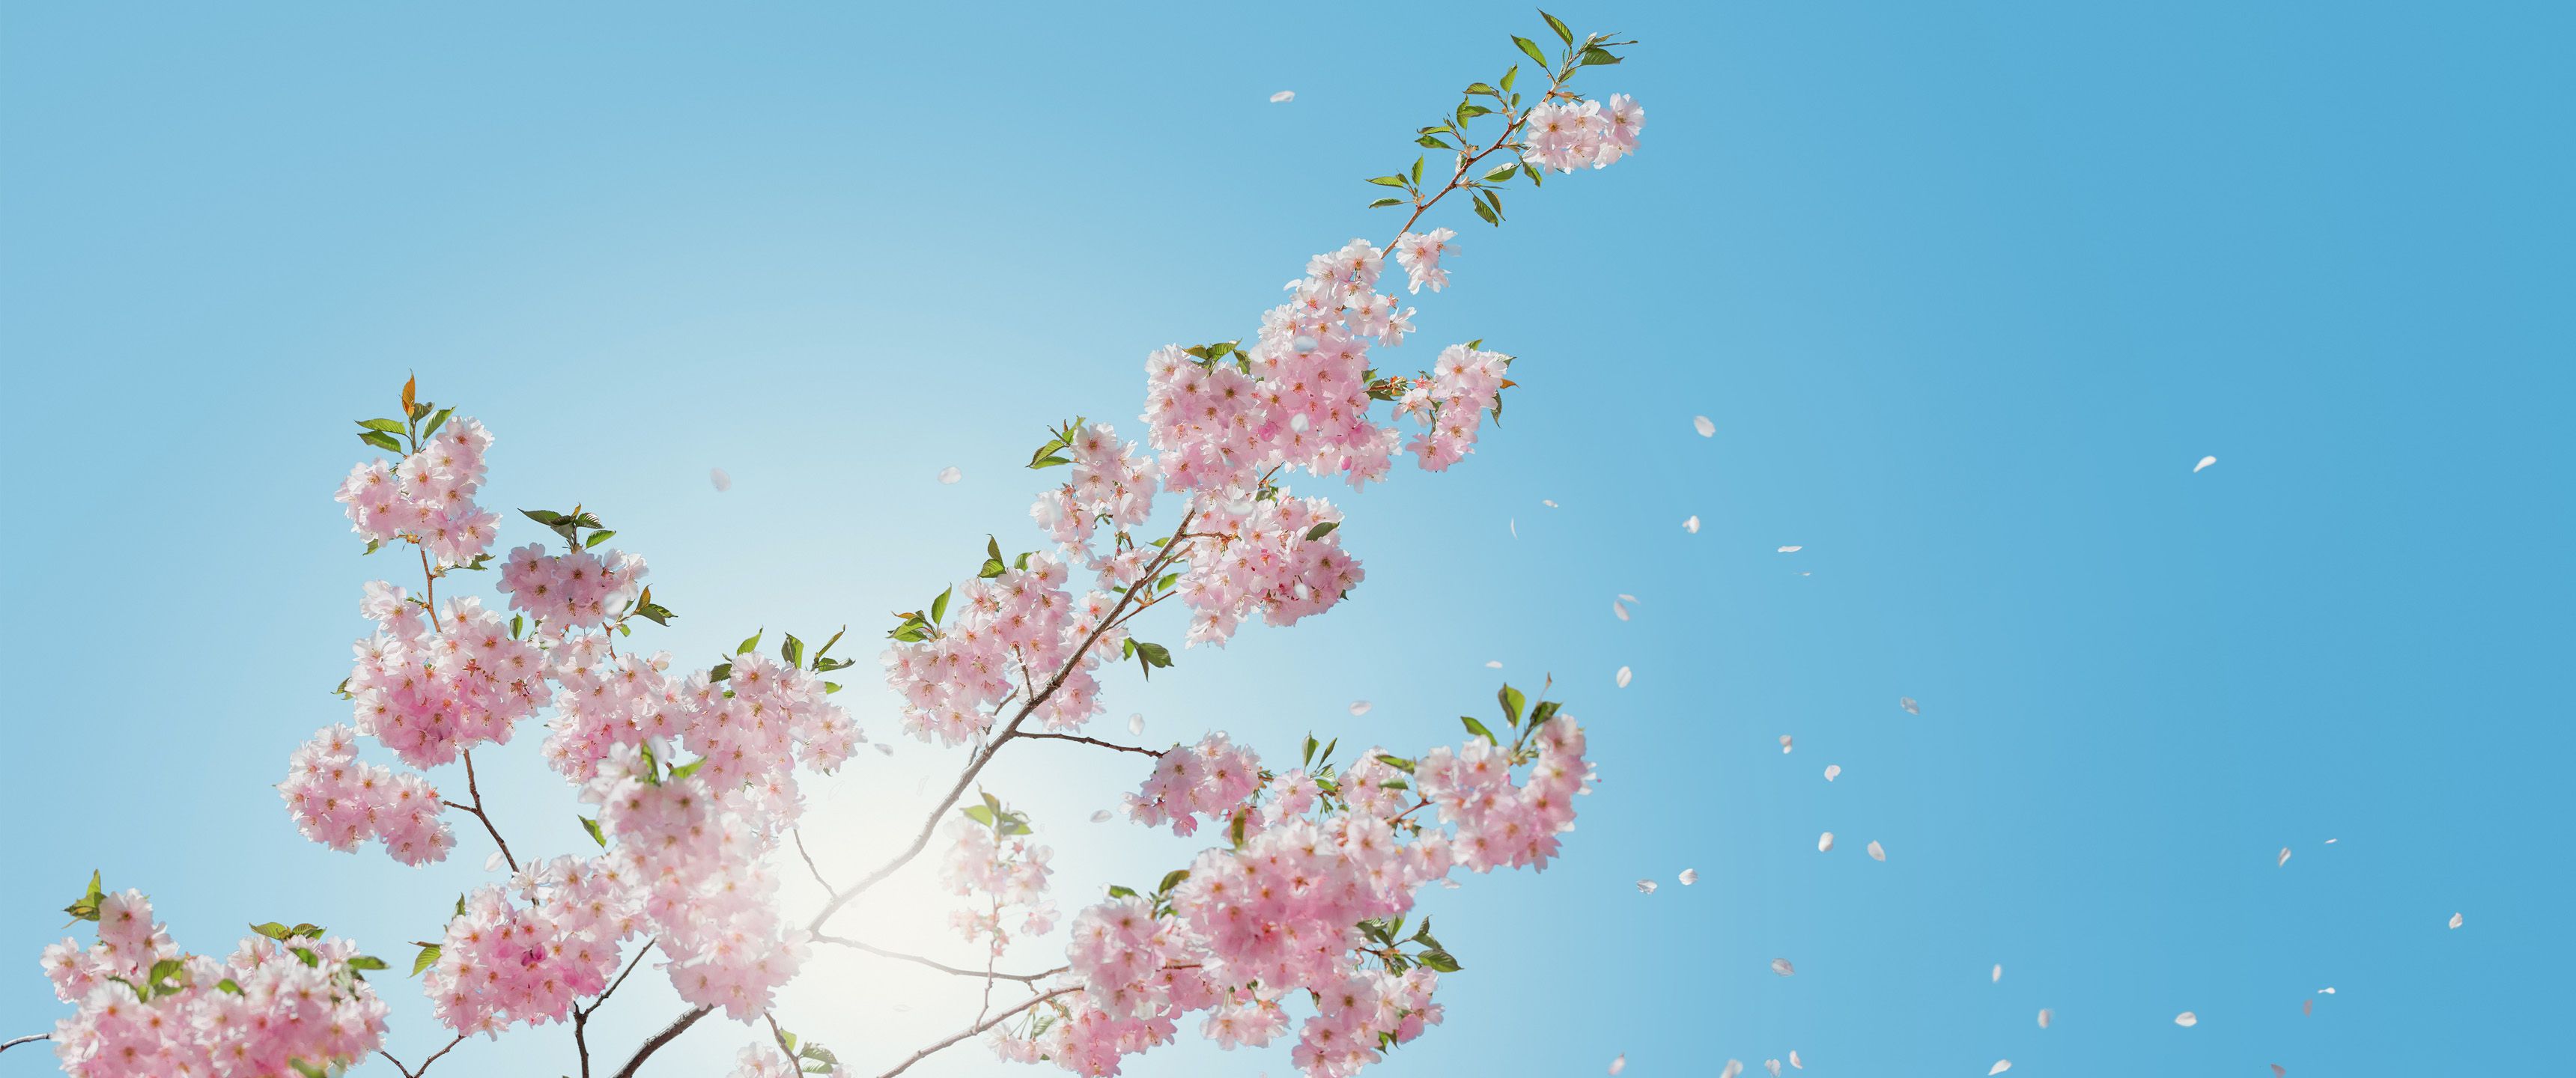 Cherry Blossom 21:9 Wallpaper. Ultrawide Monitor 21:9 Wallpaper